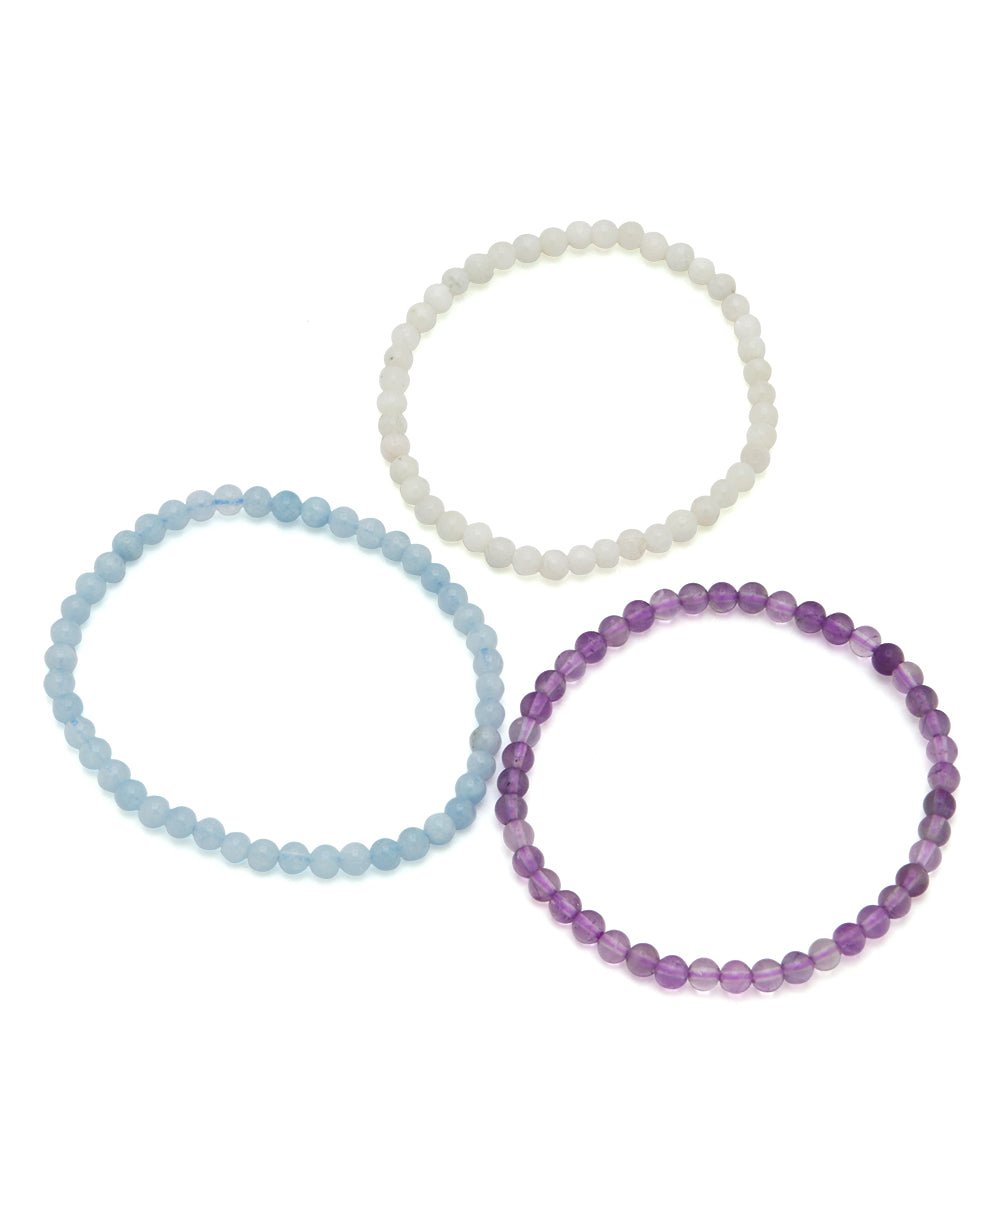 Energy Bracelets for Tranquility, Set of 3 - Bracelets